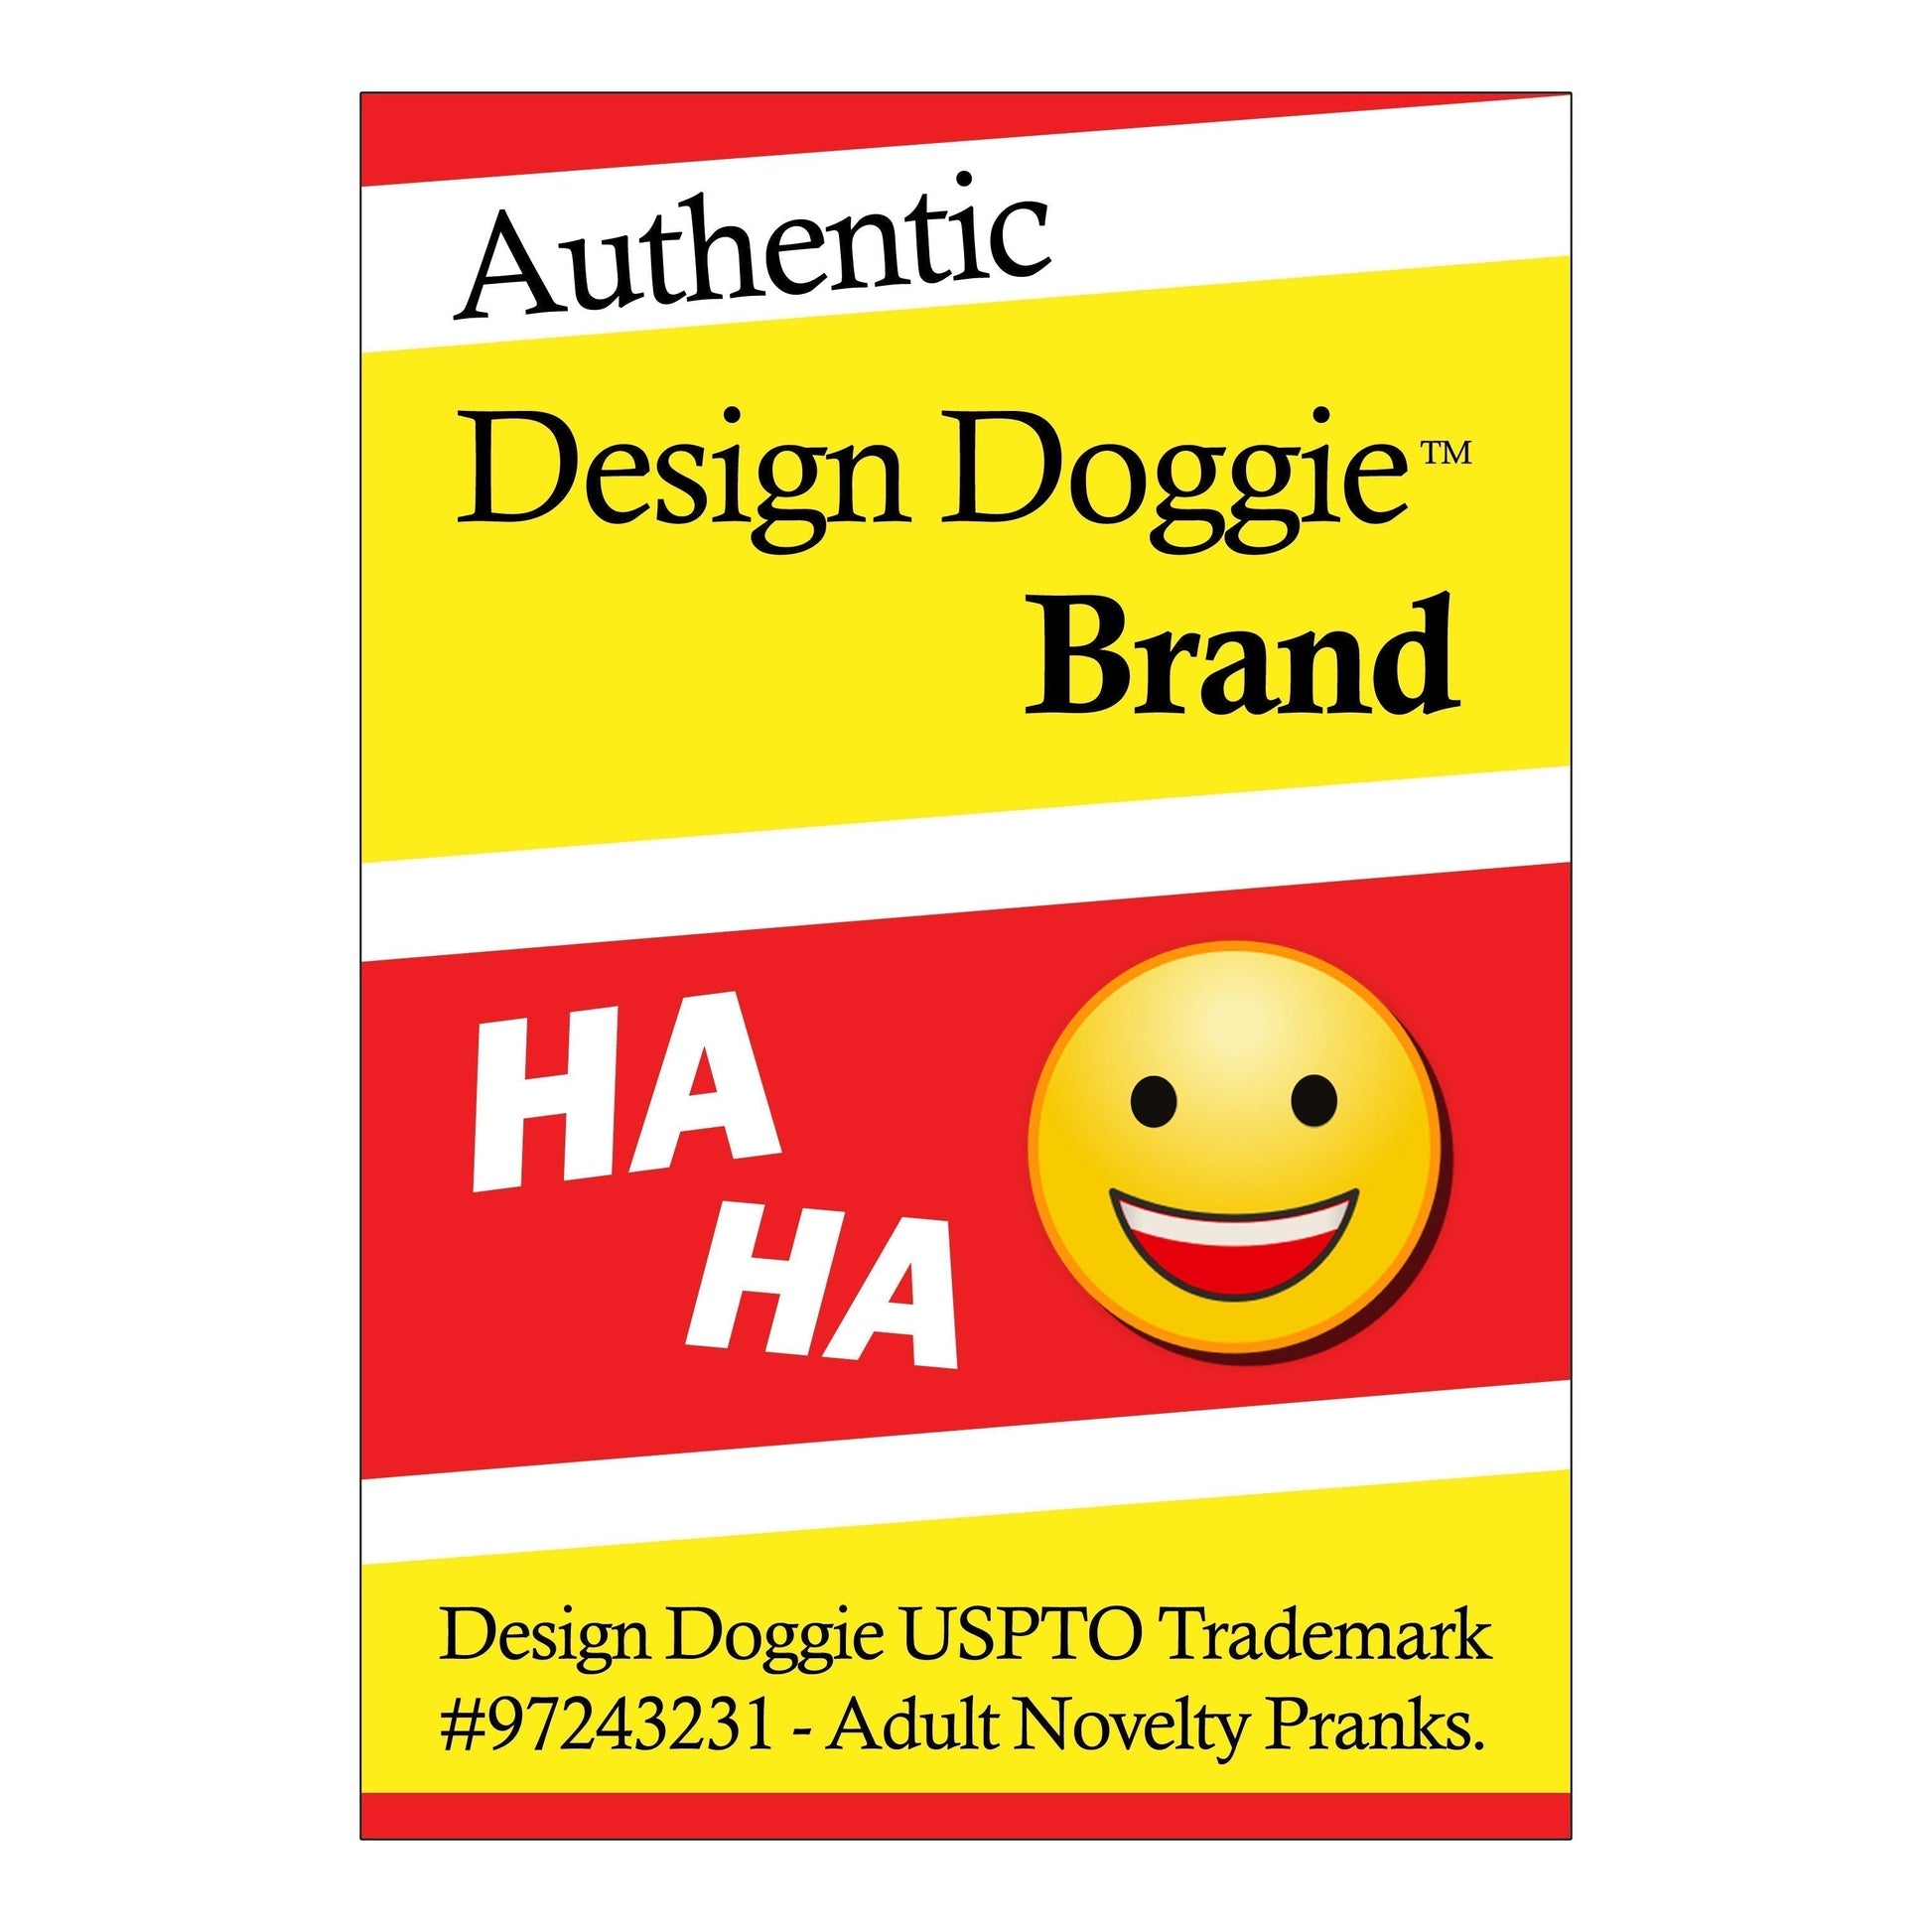 Stool Sample Kit Design Doggie Brand